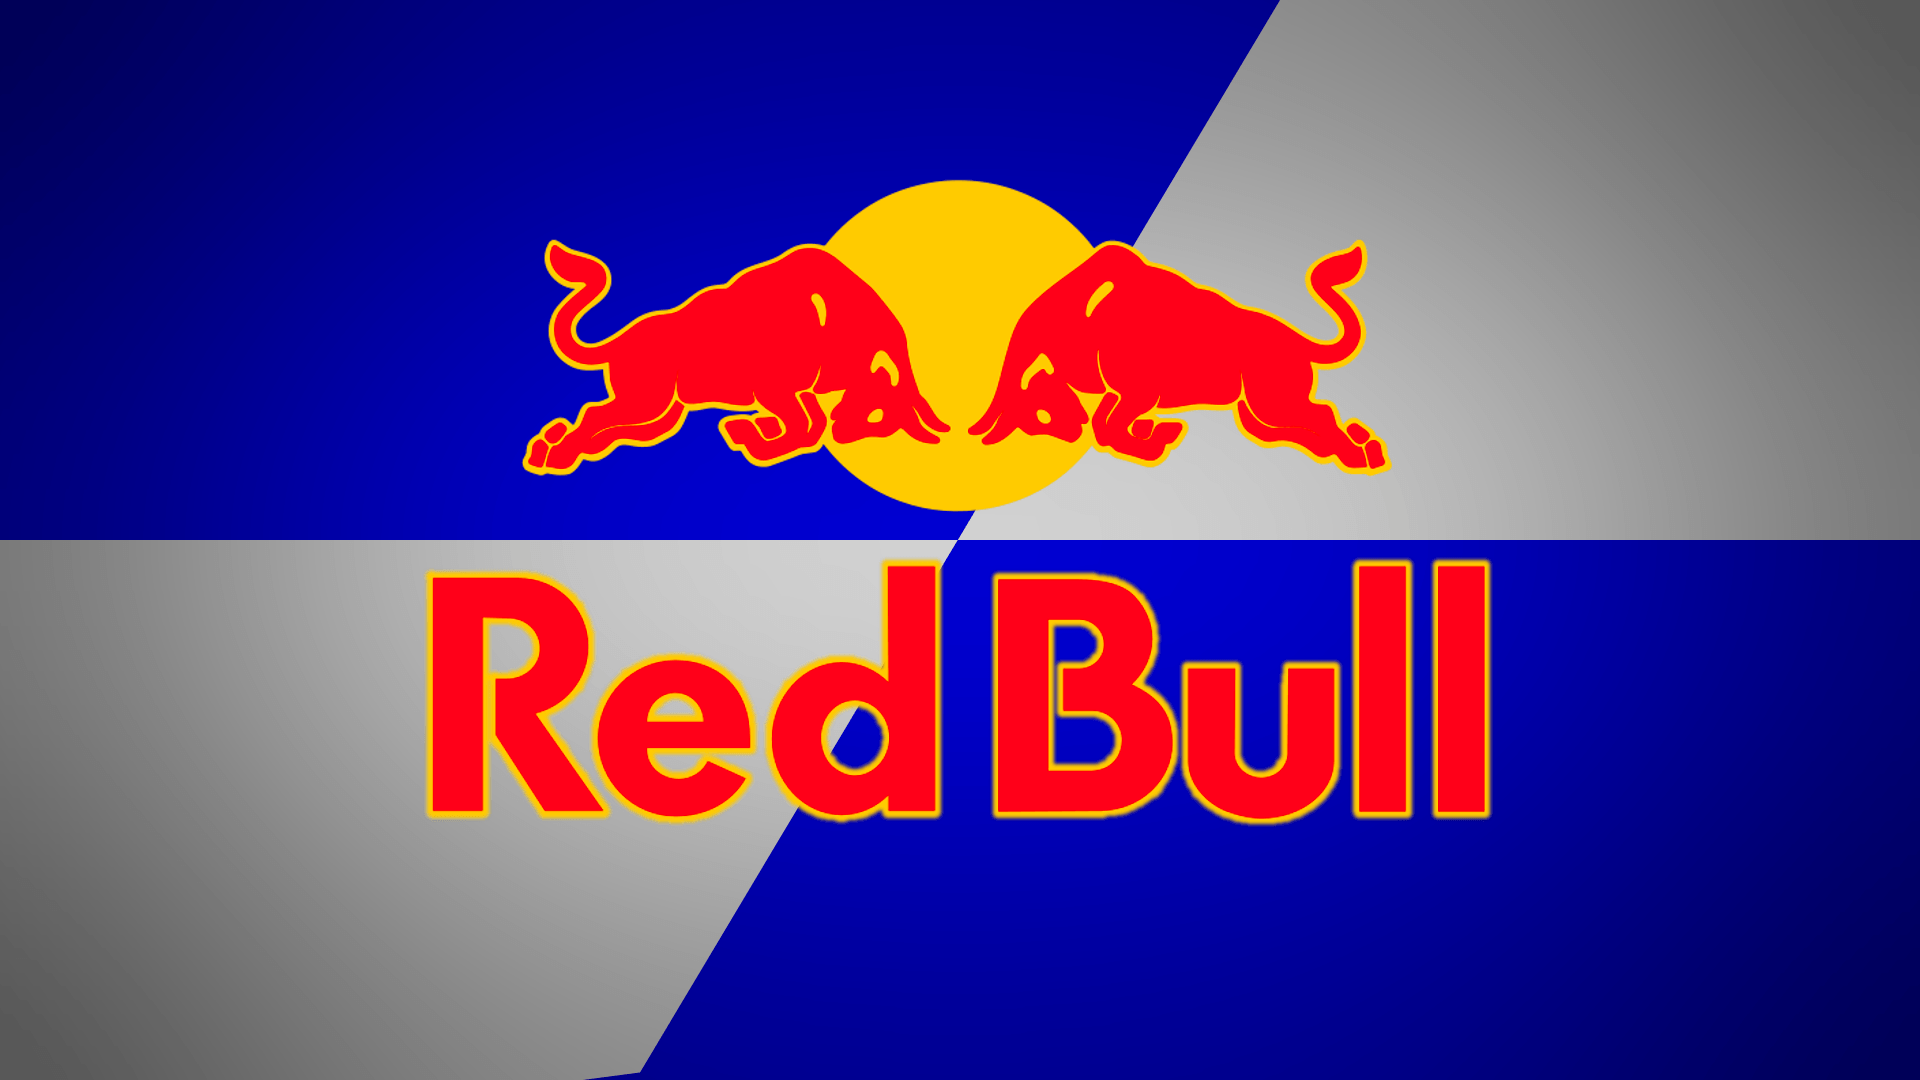 Free Download Red Bull Logo Wallpaper